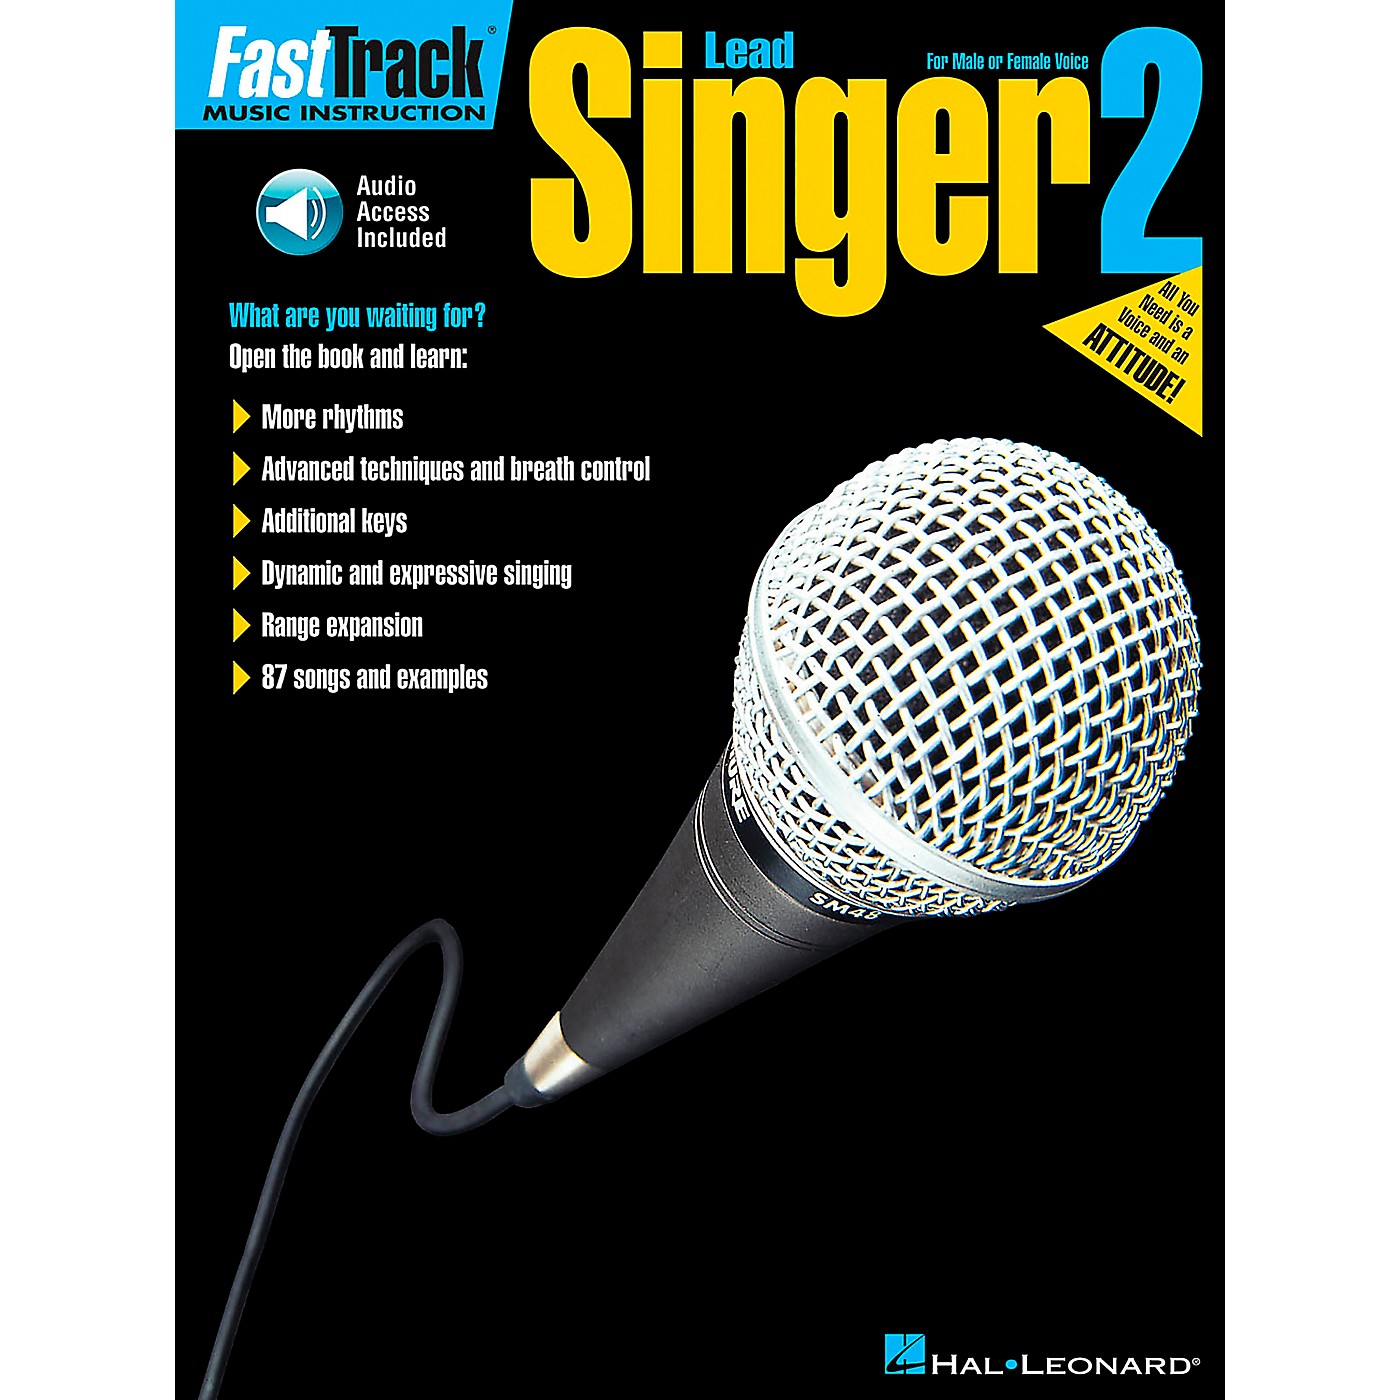 Hal Leonard FastTrack Lead Singer Method Book 2 Book/CD thumbnail